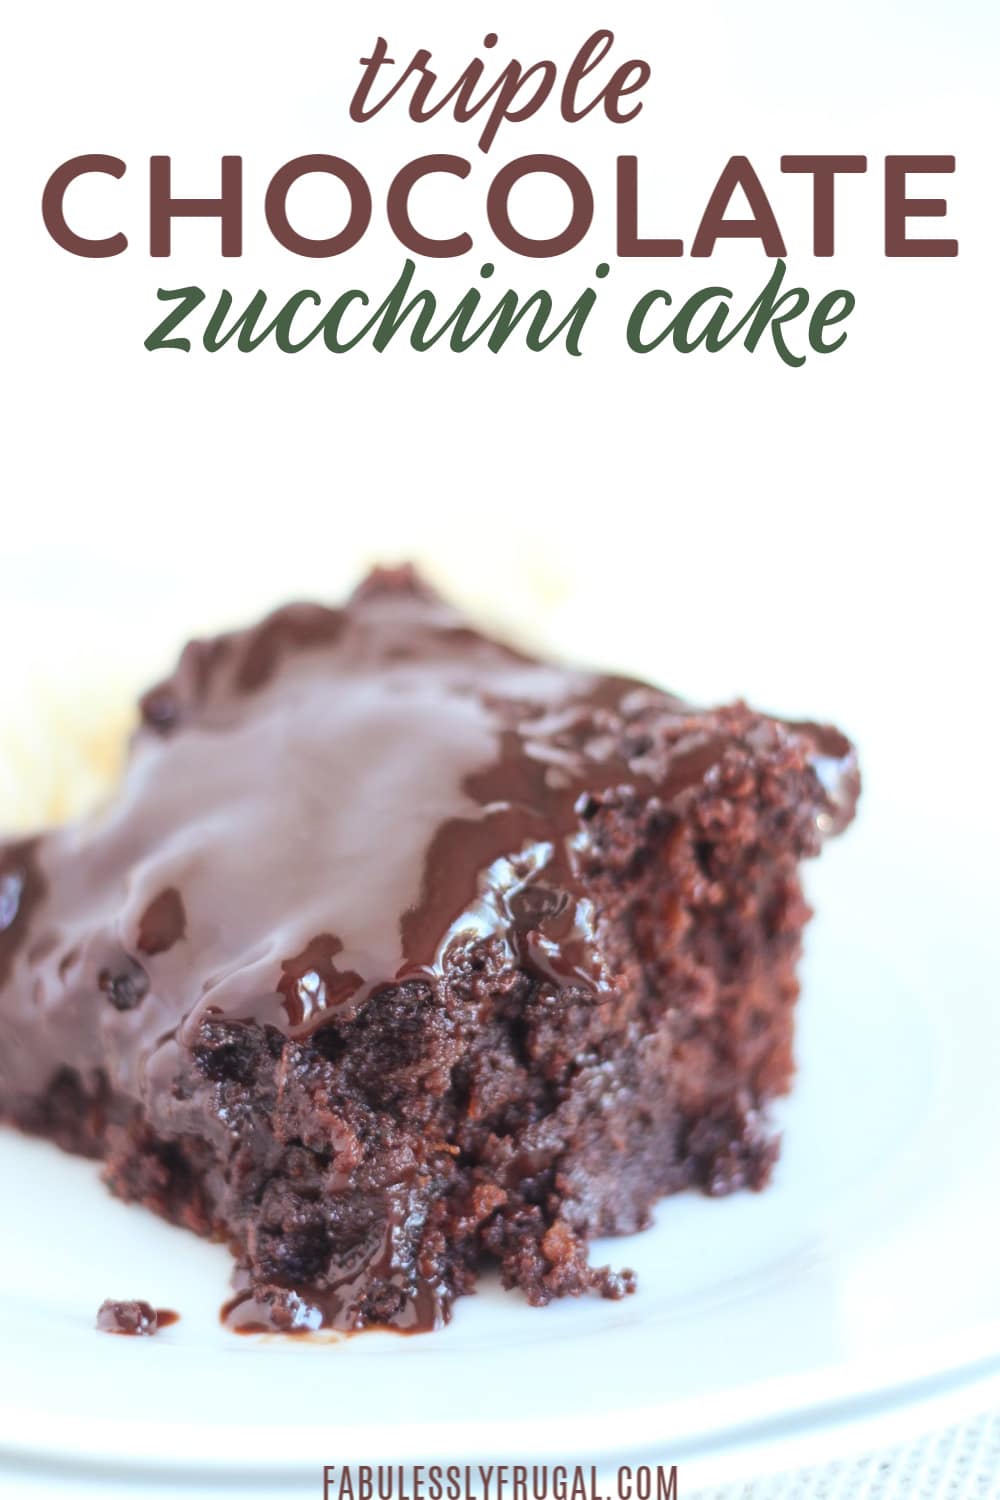 Chocolate zucchini cake with sour cream